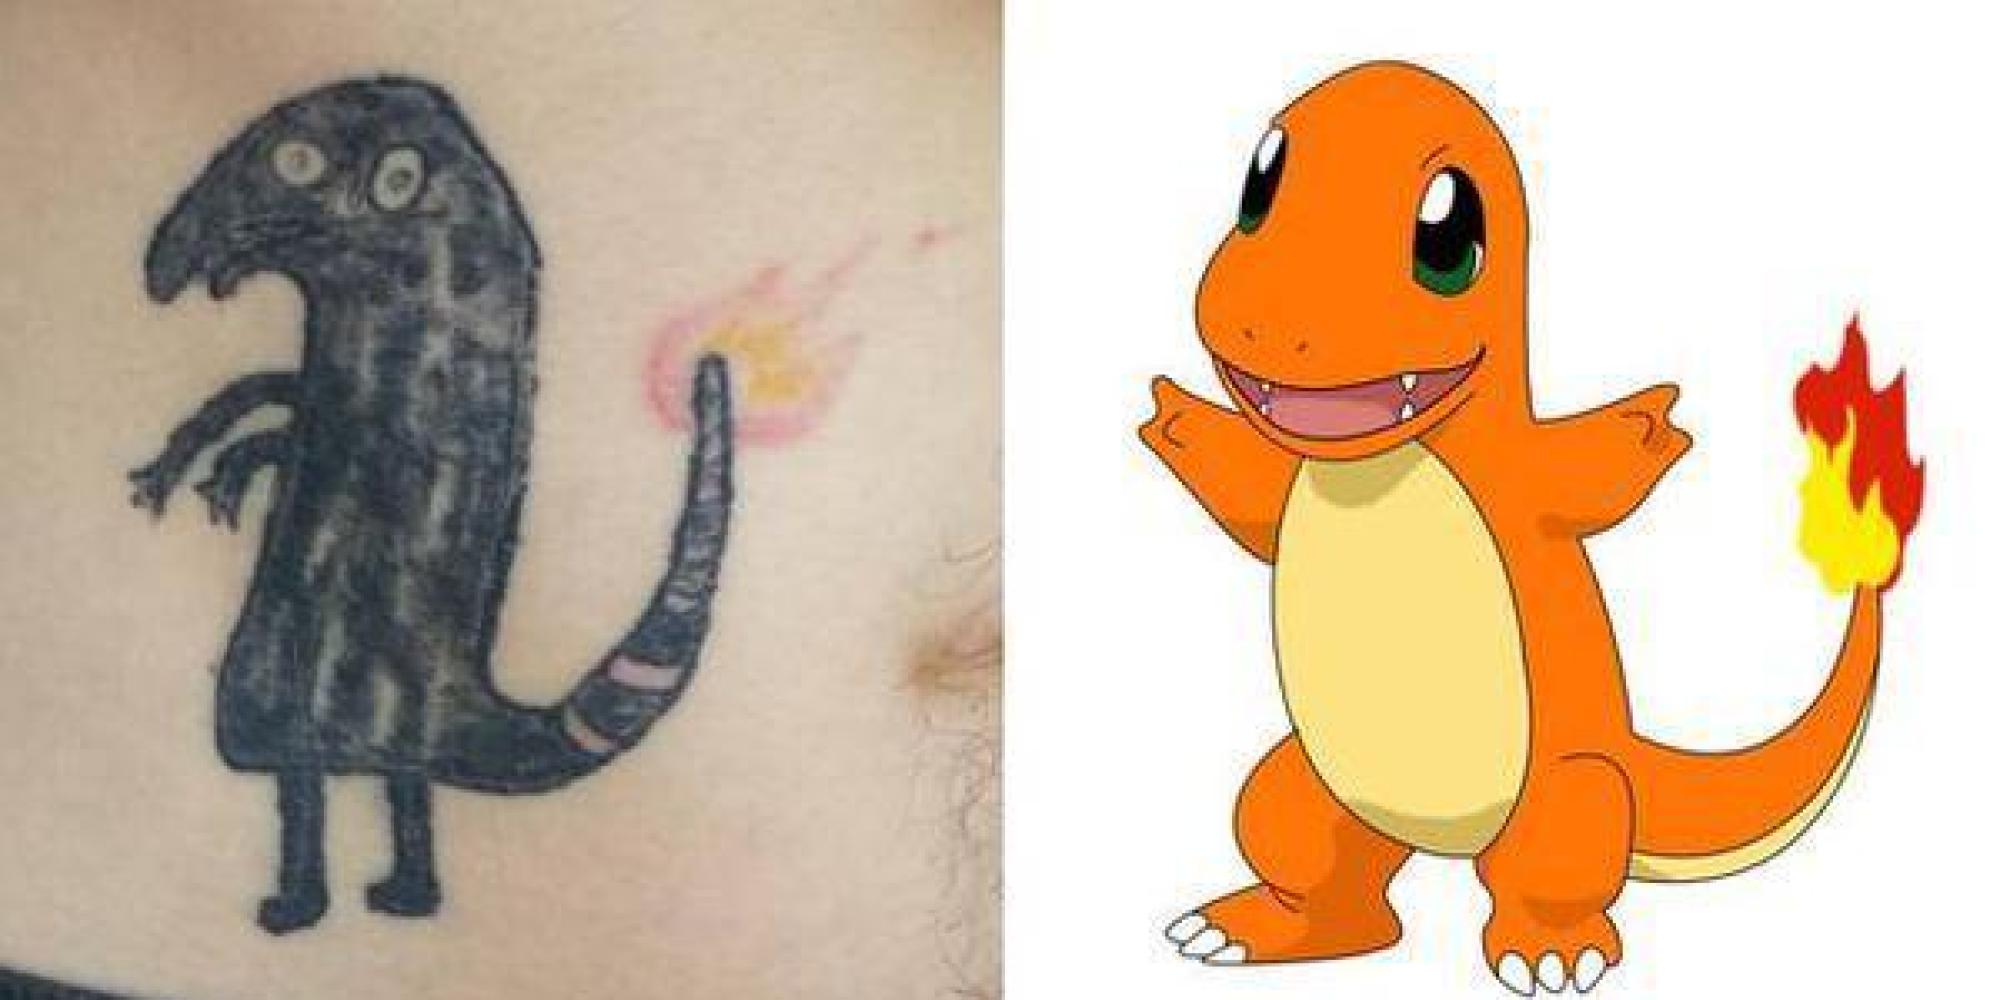 Guy Tattoos Misshapen Pokémon On Himself, Achieves Meme Superstardom